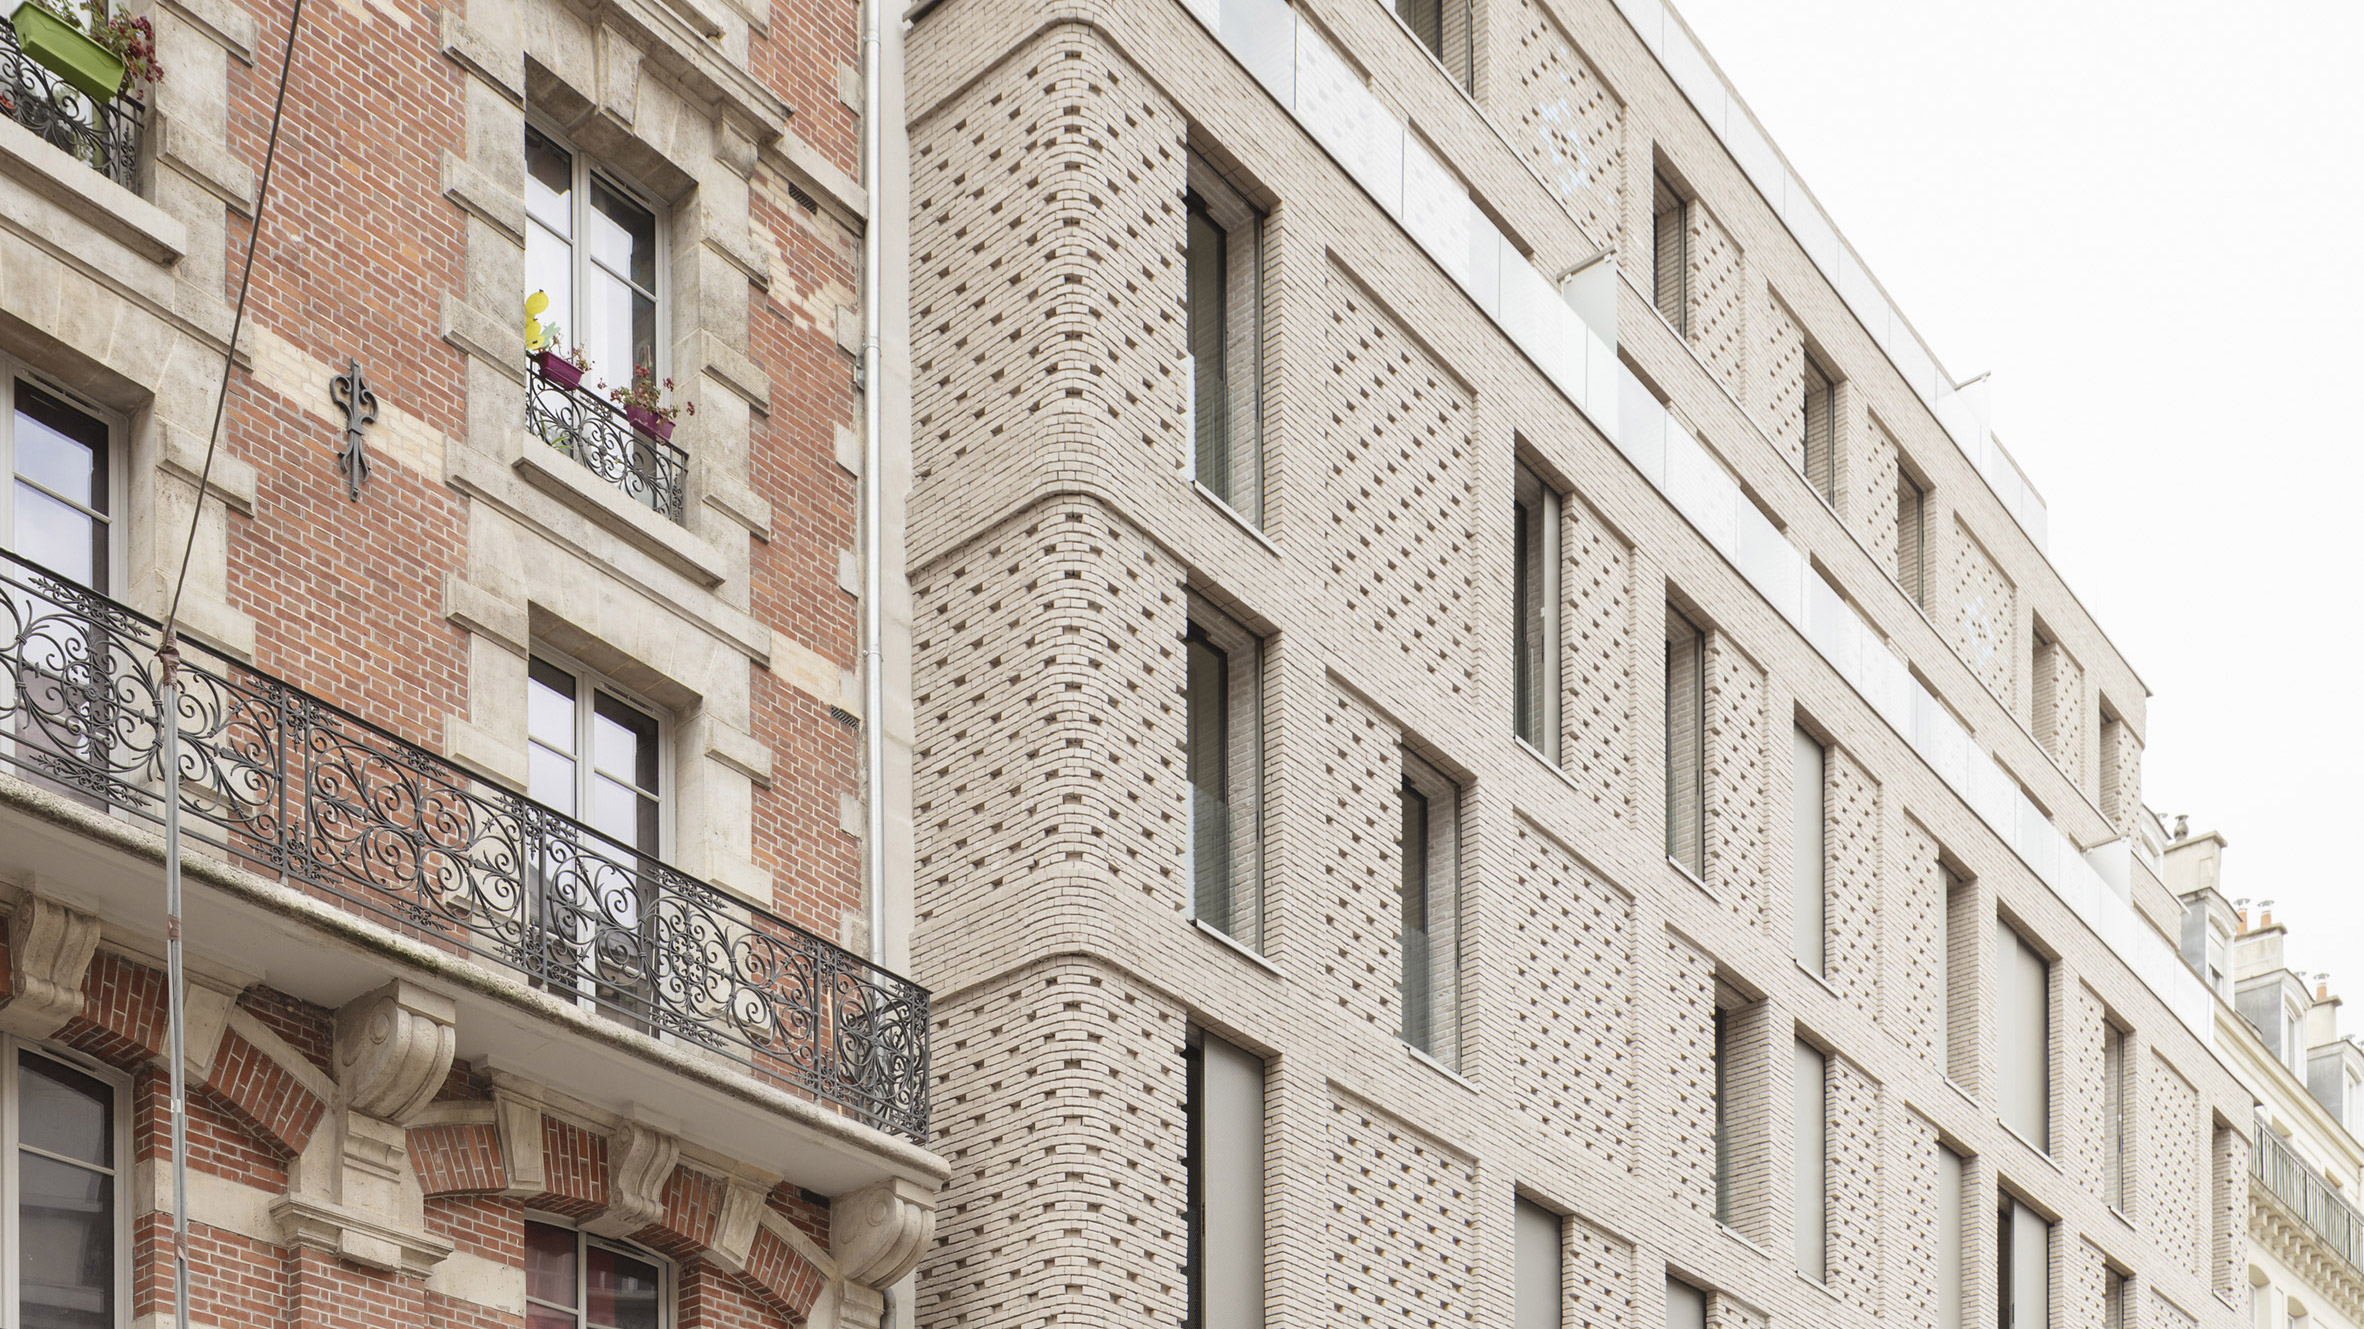 Avenier Cornejo designs Parisian apartment block with patterned brick facade